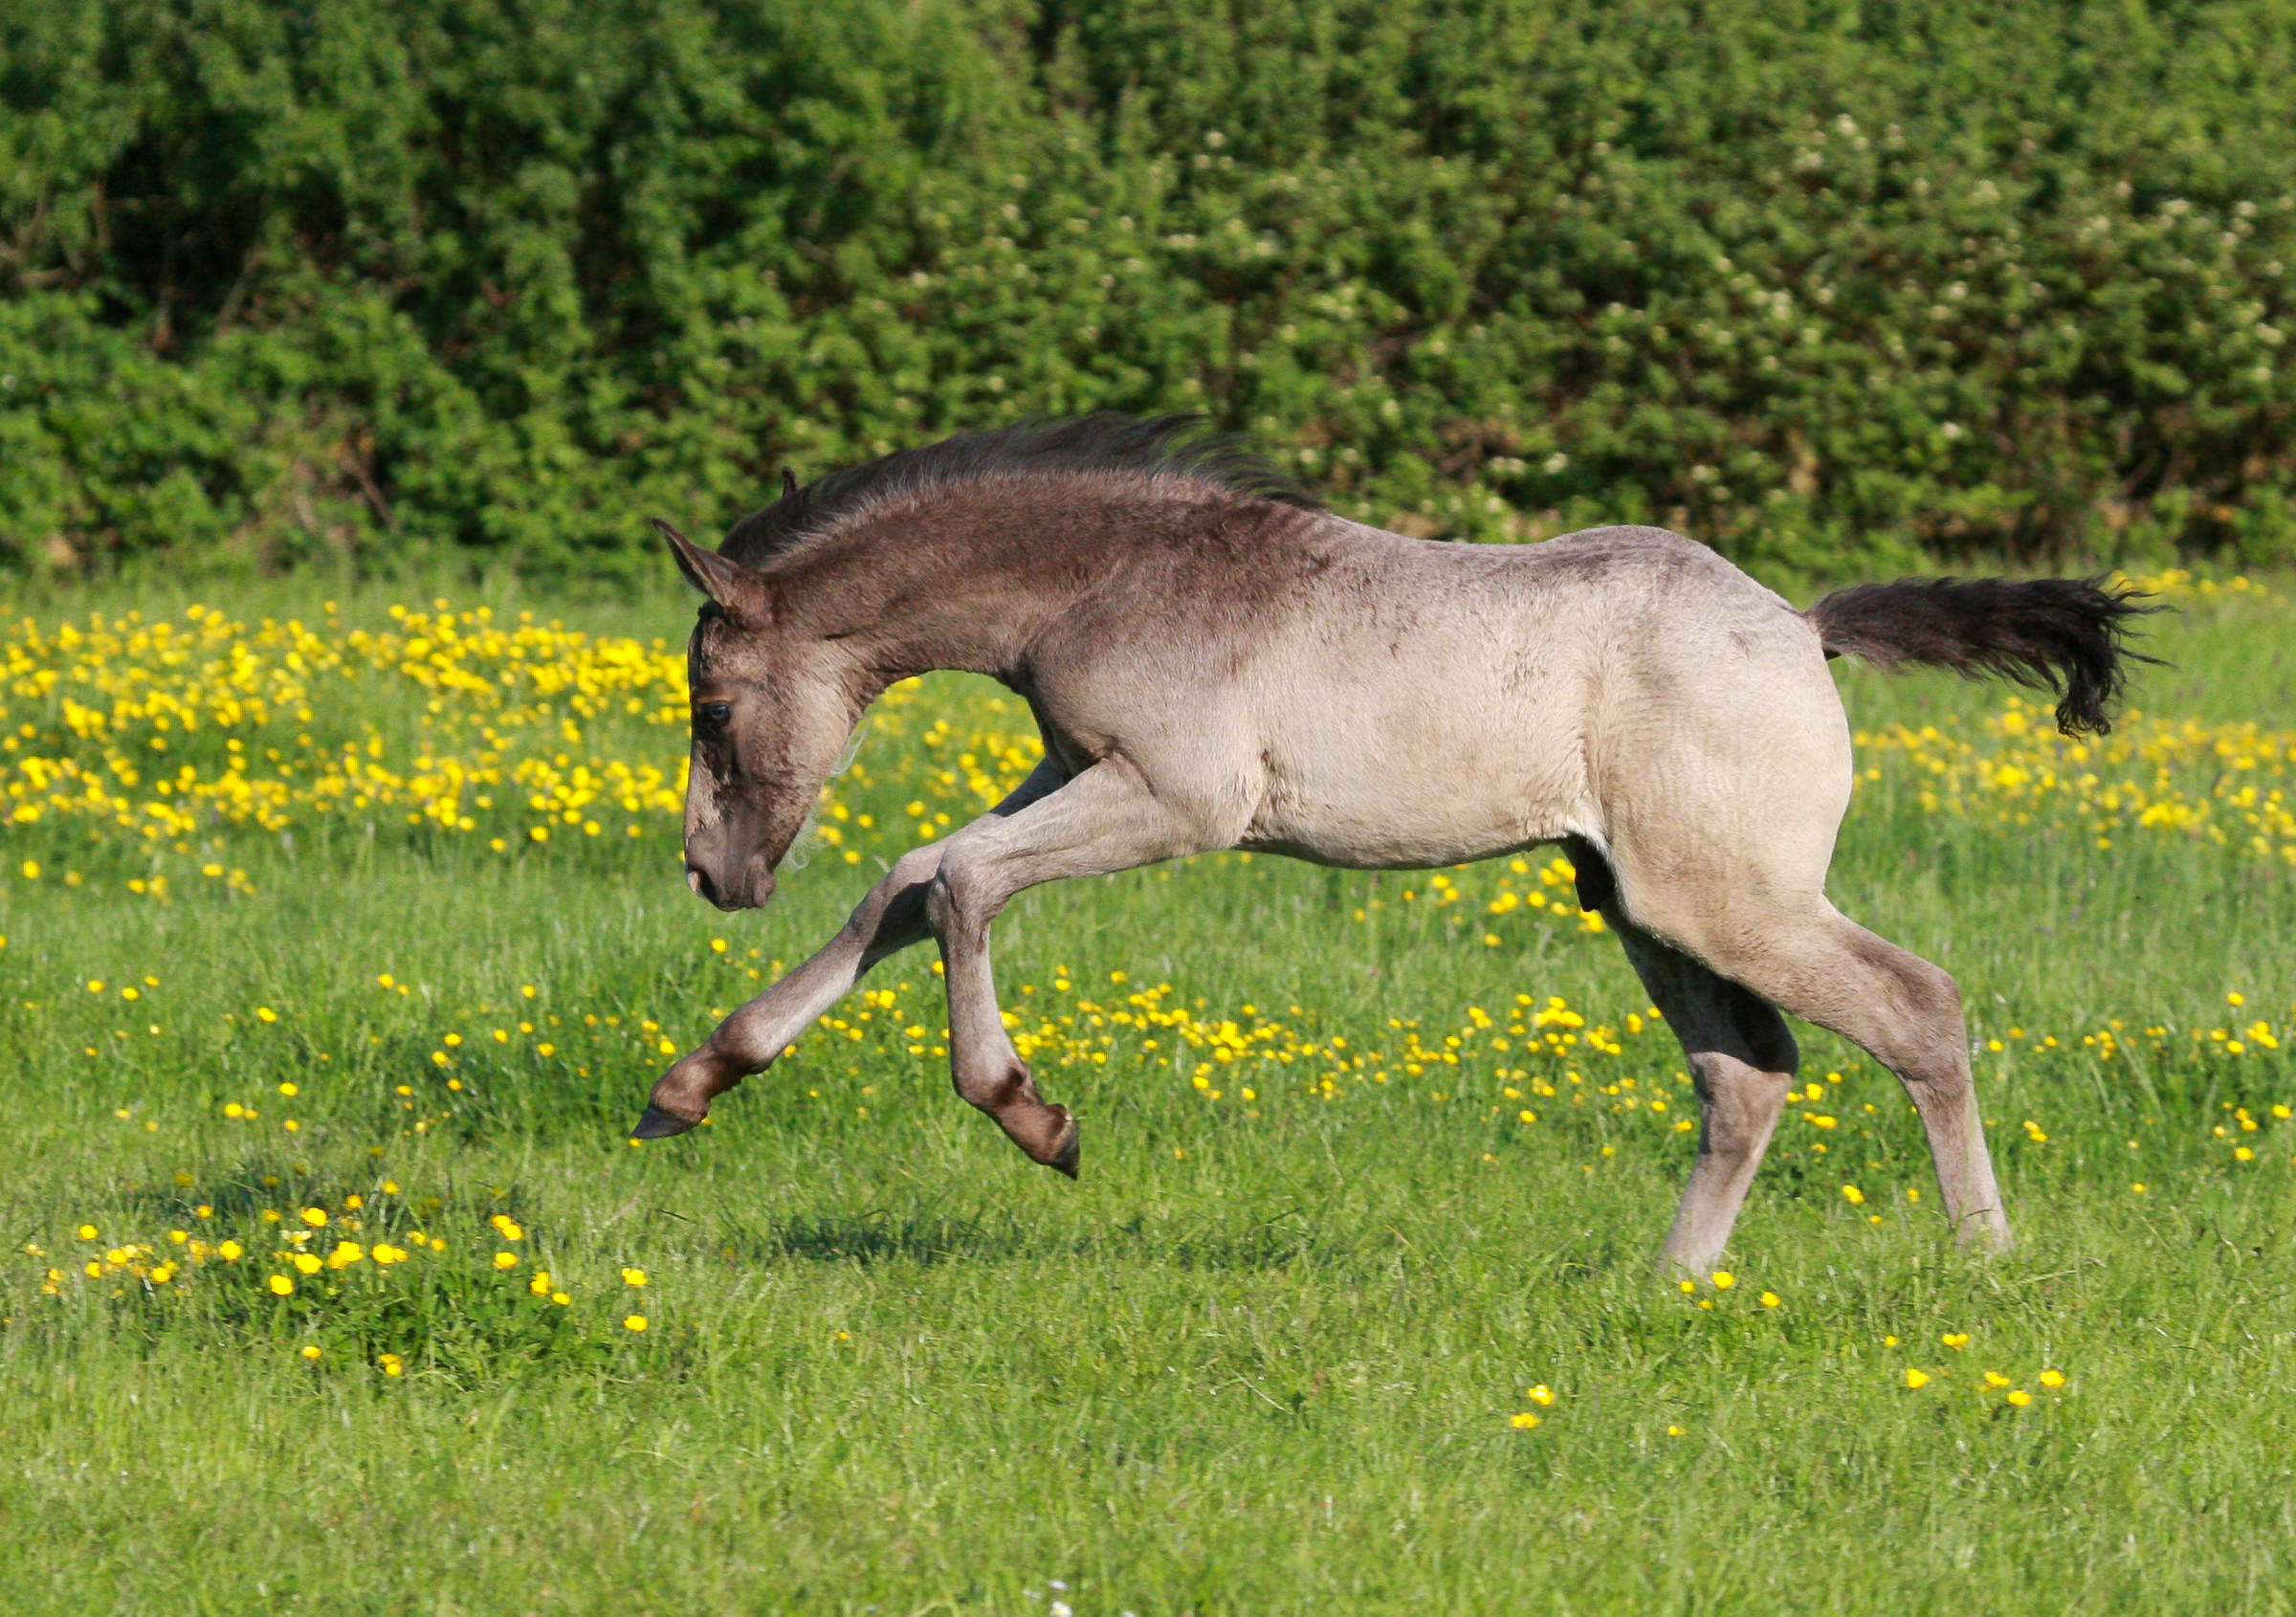 Dun Irish Sport Horse foal cantering in a green grass paddock